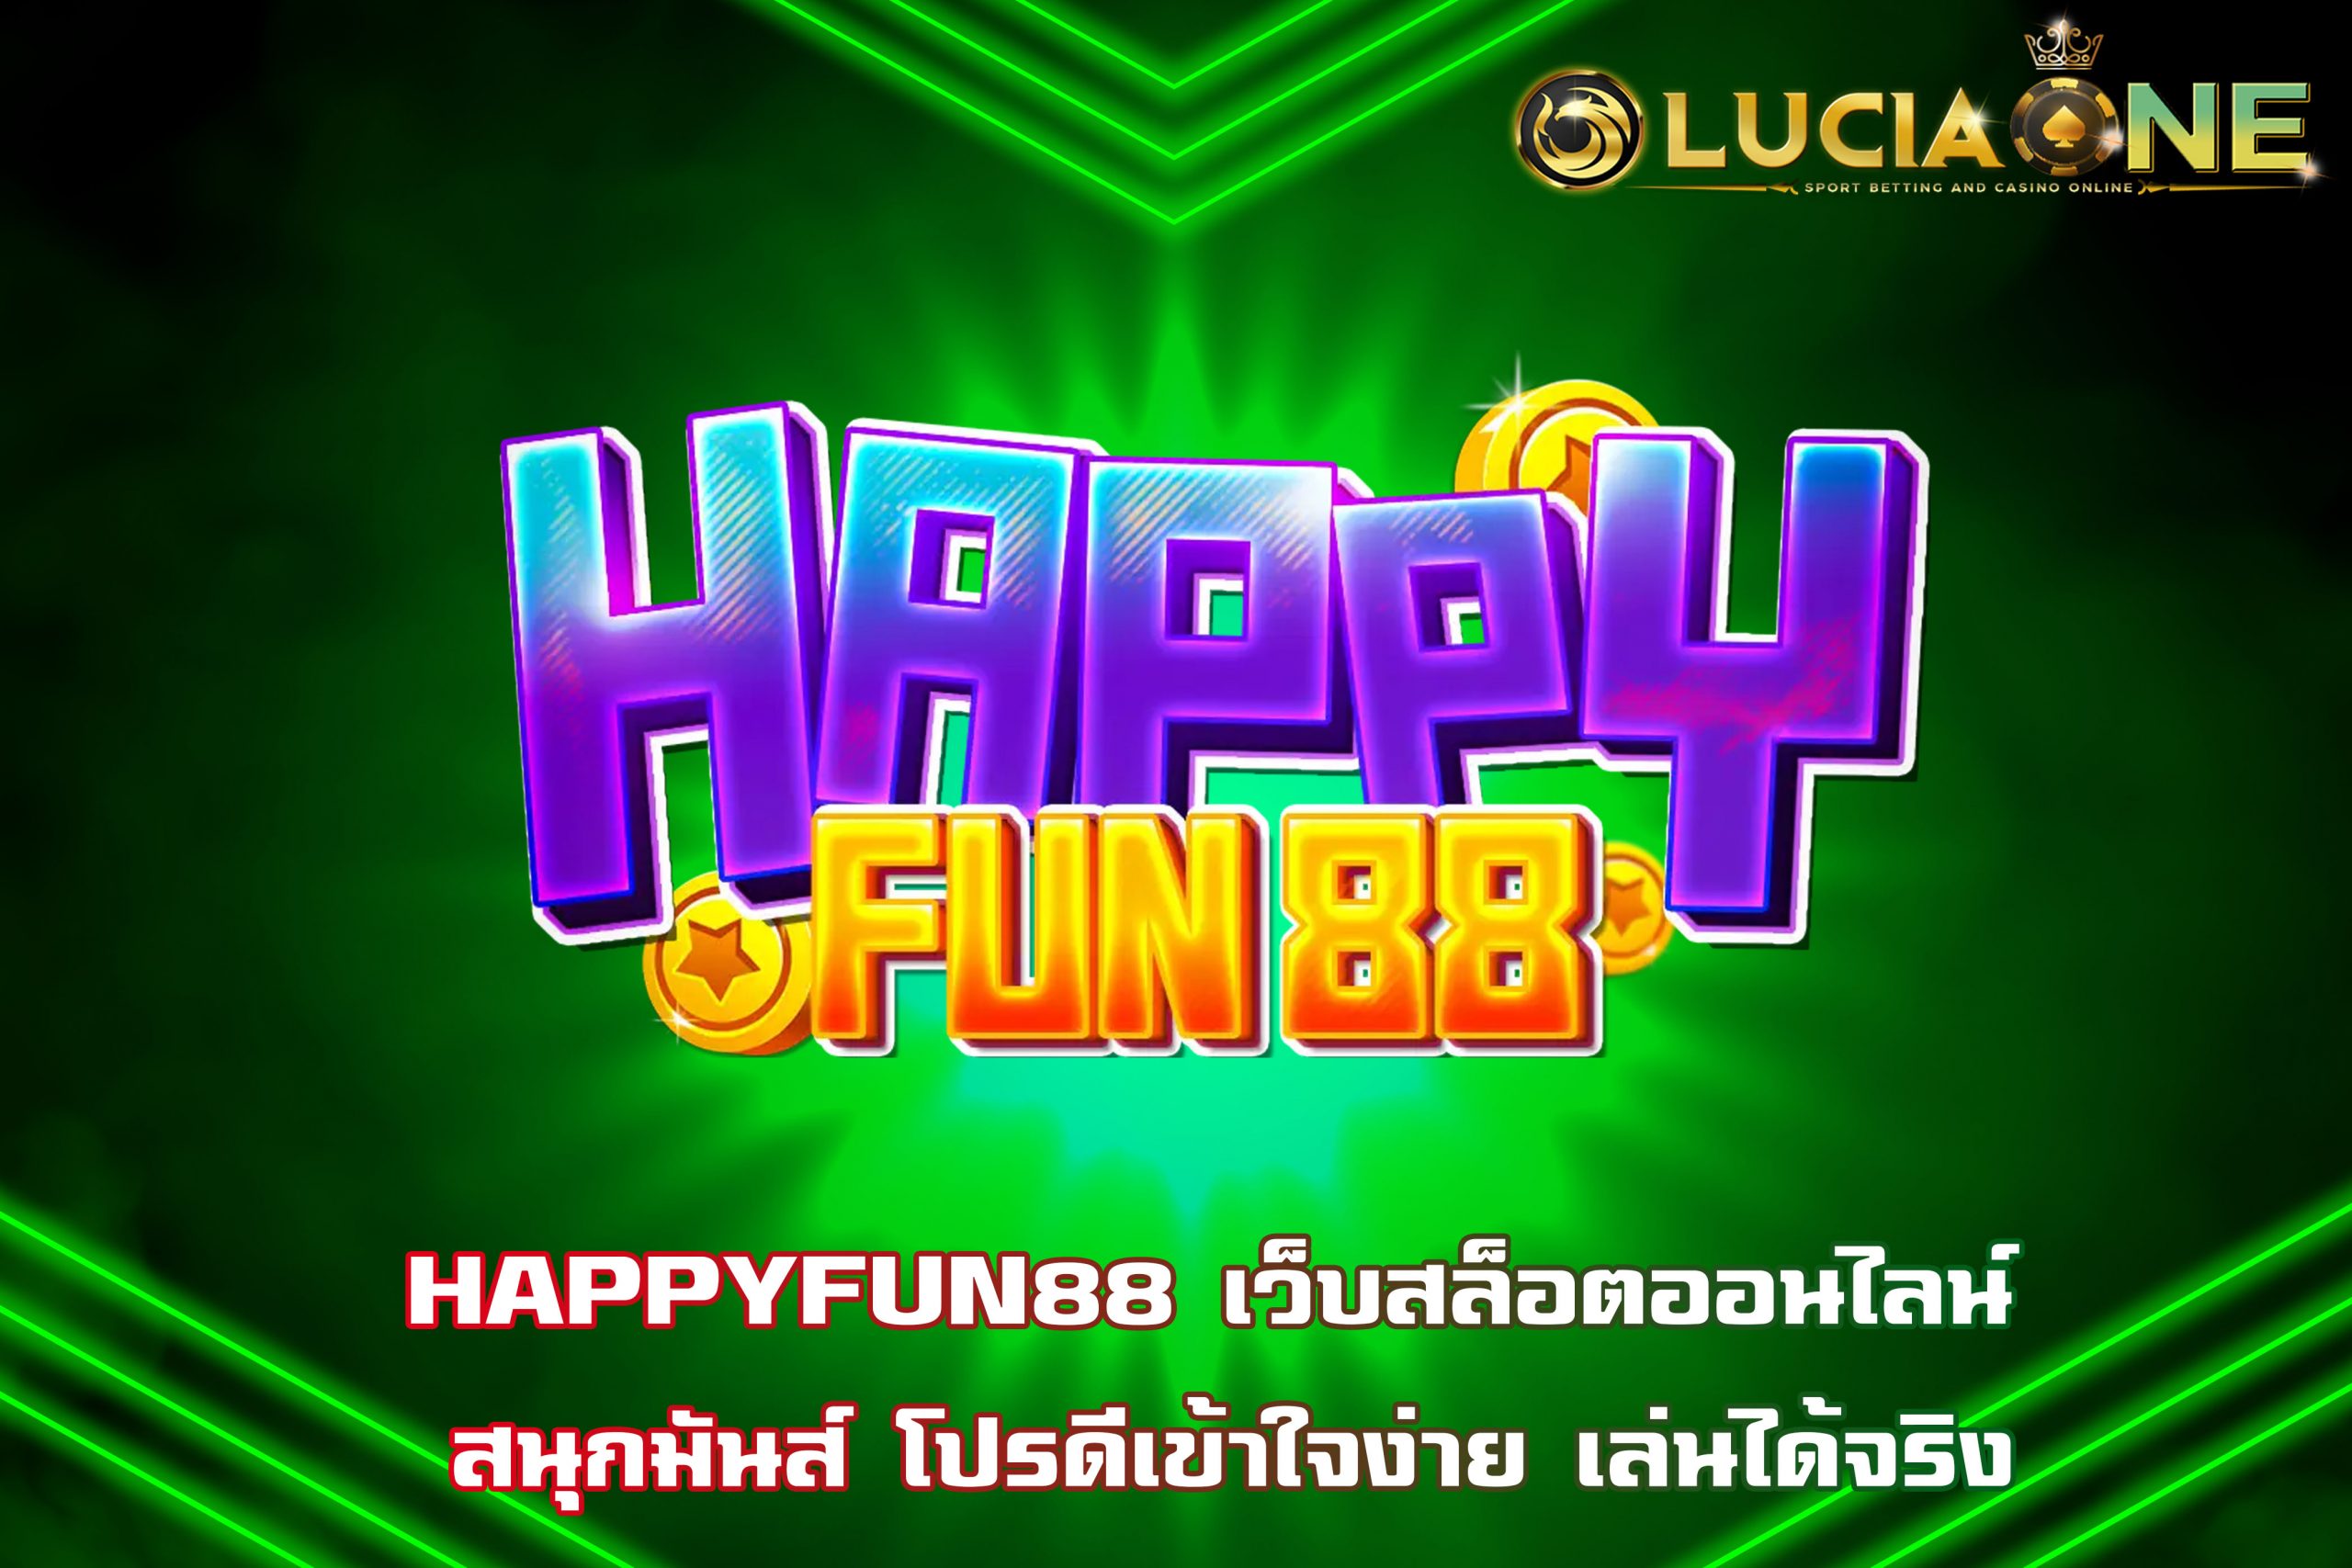 HAPPYFUN88 เว็บสล็อตออนไลน์ สนุกมันส์ โปรดีเข้าใจง่าย เล่นได้จริง